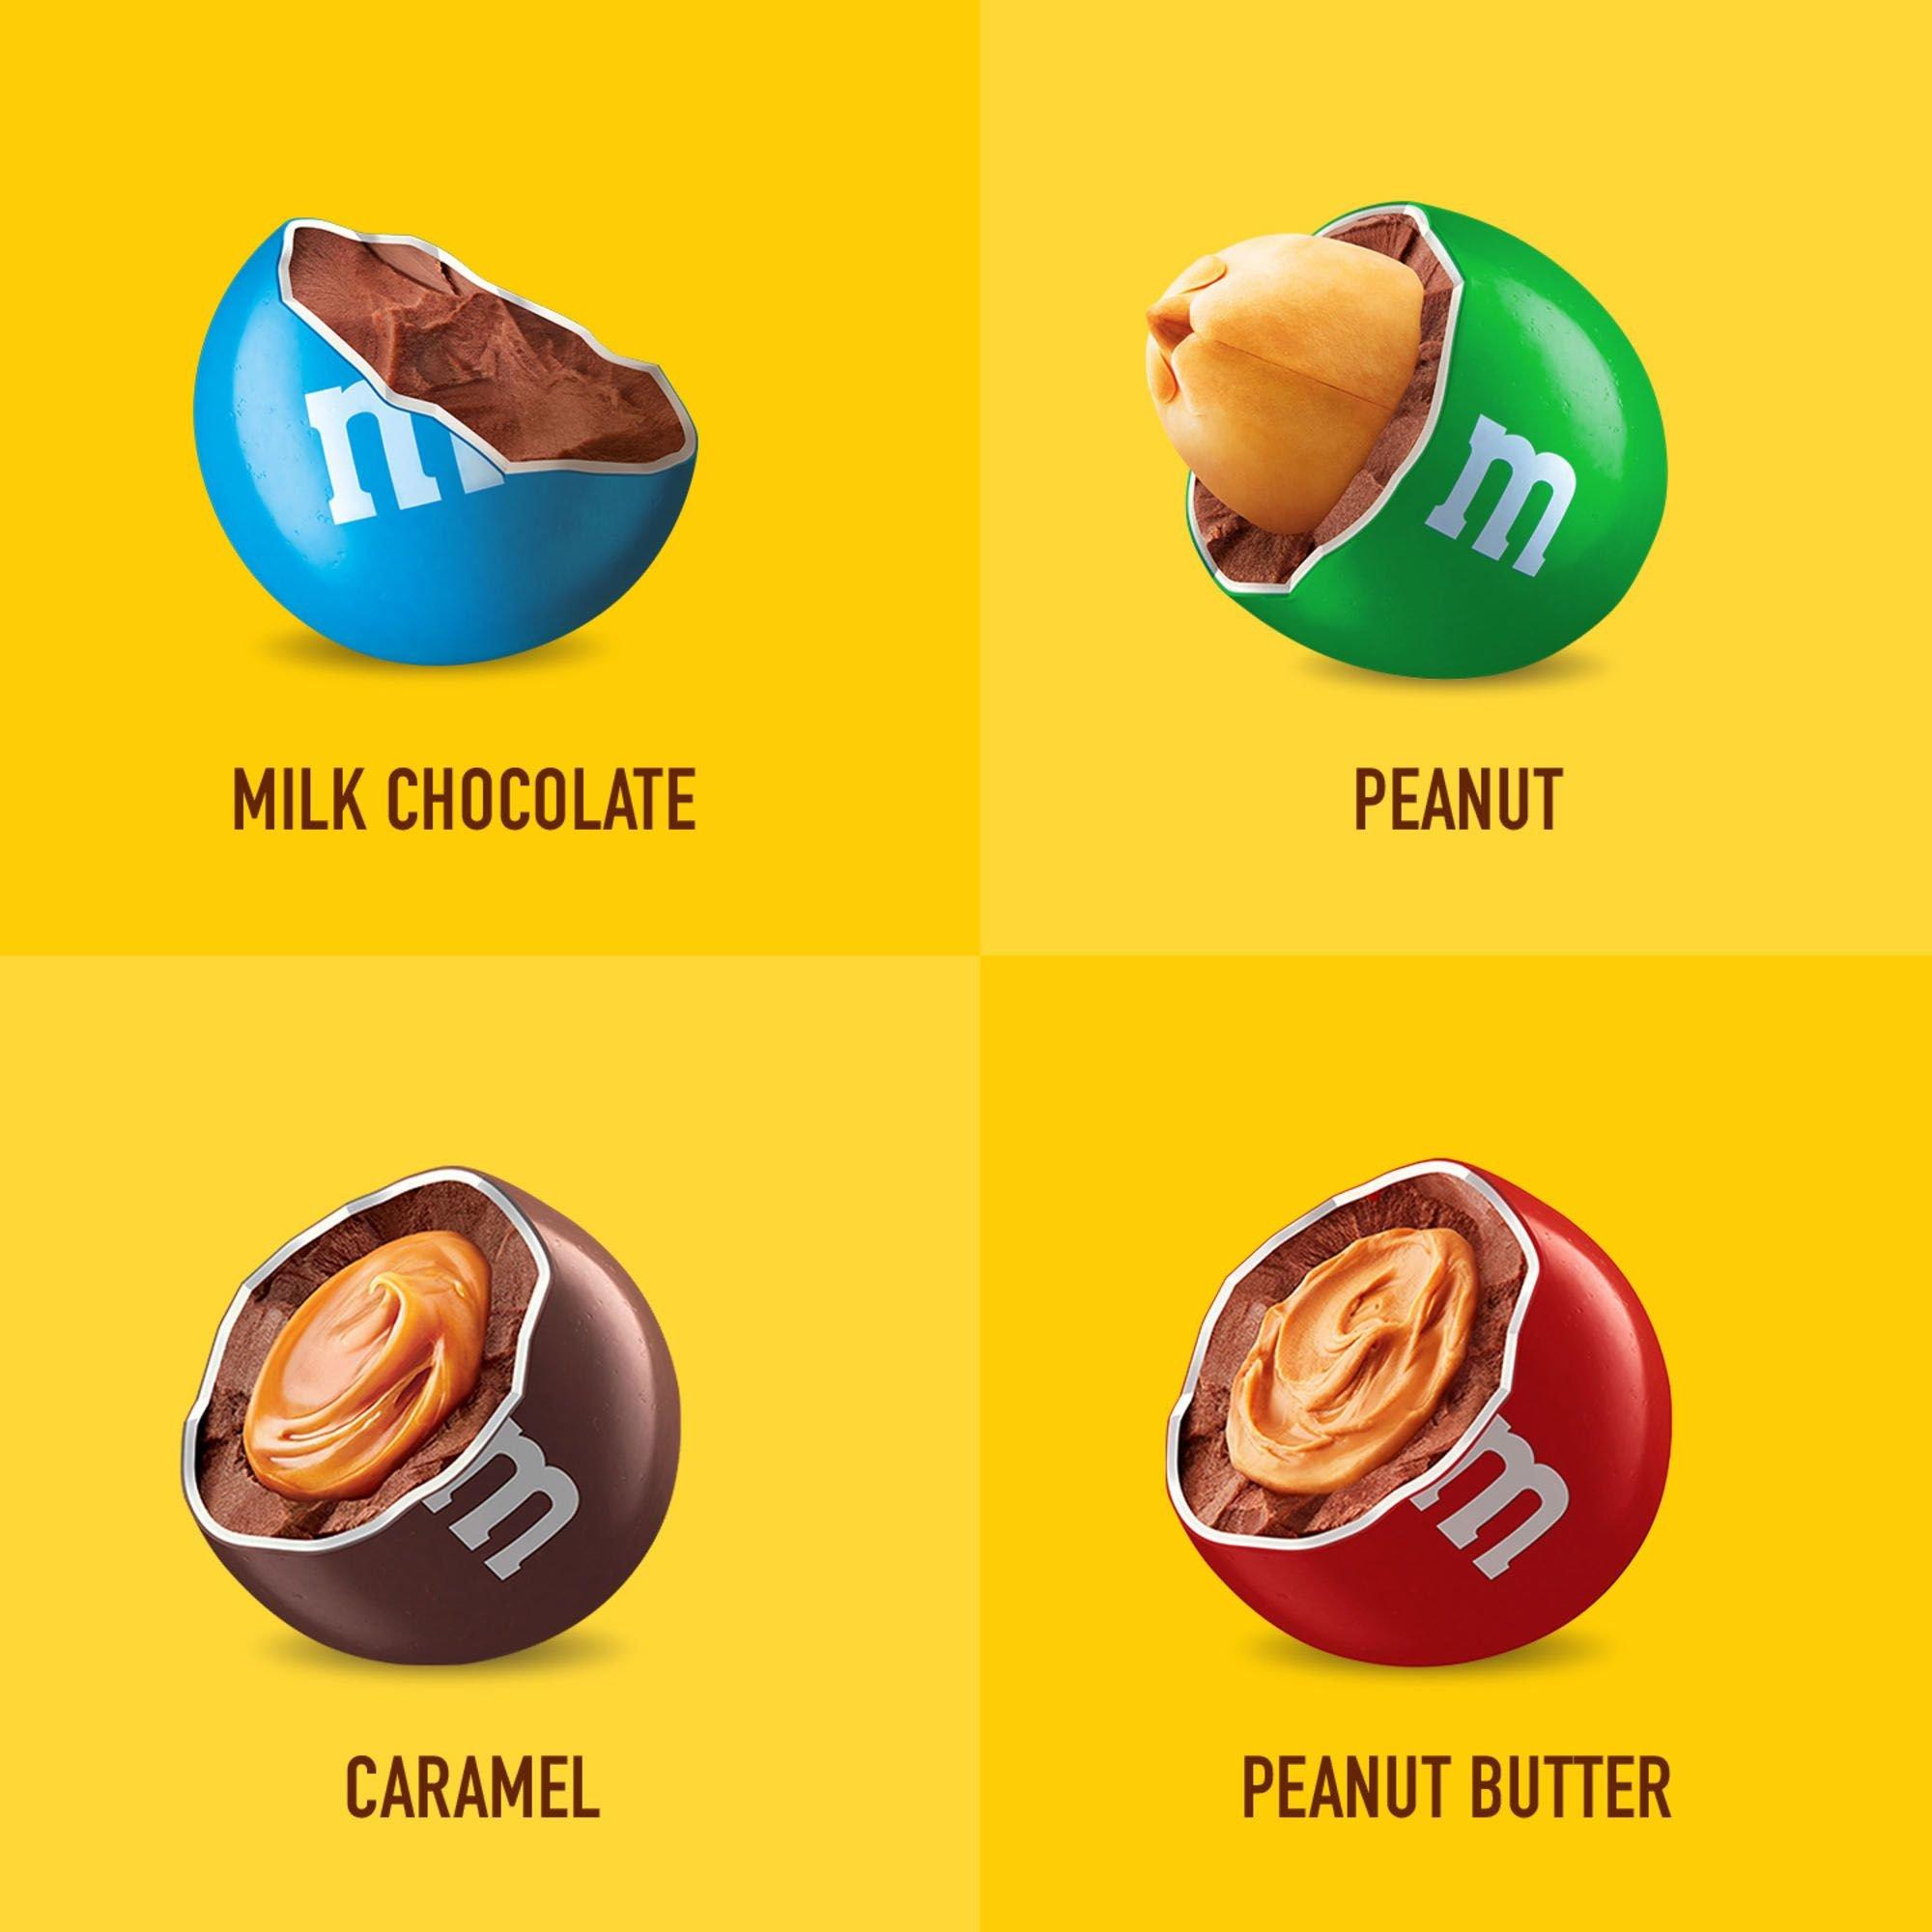 peanut butter m&ms big bag